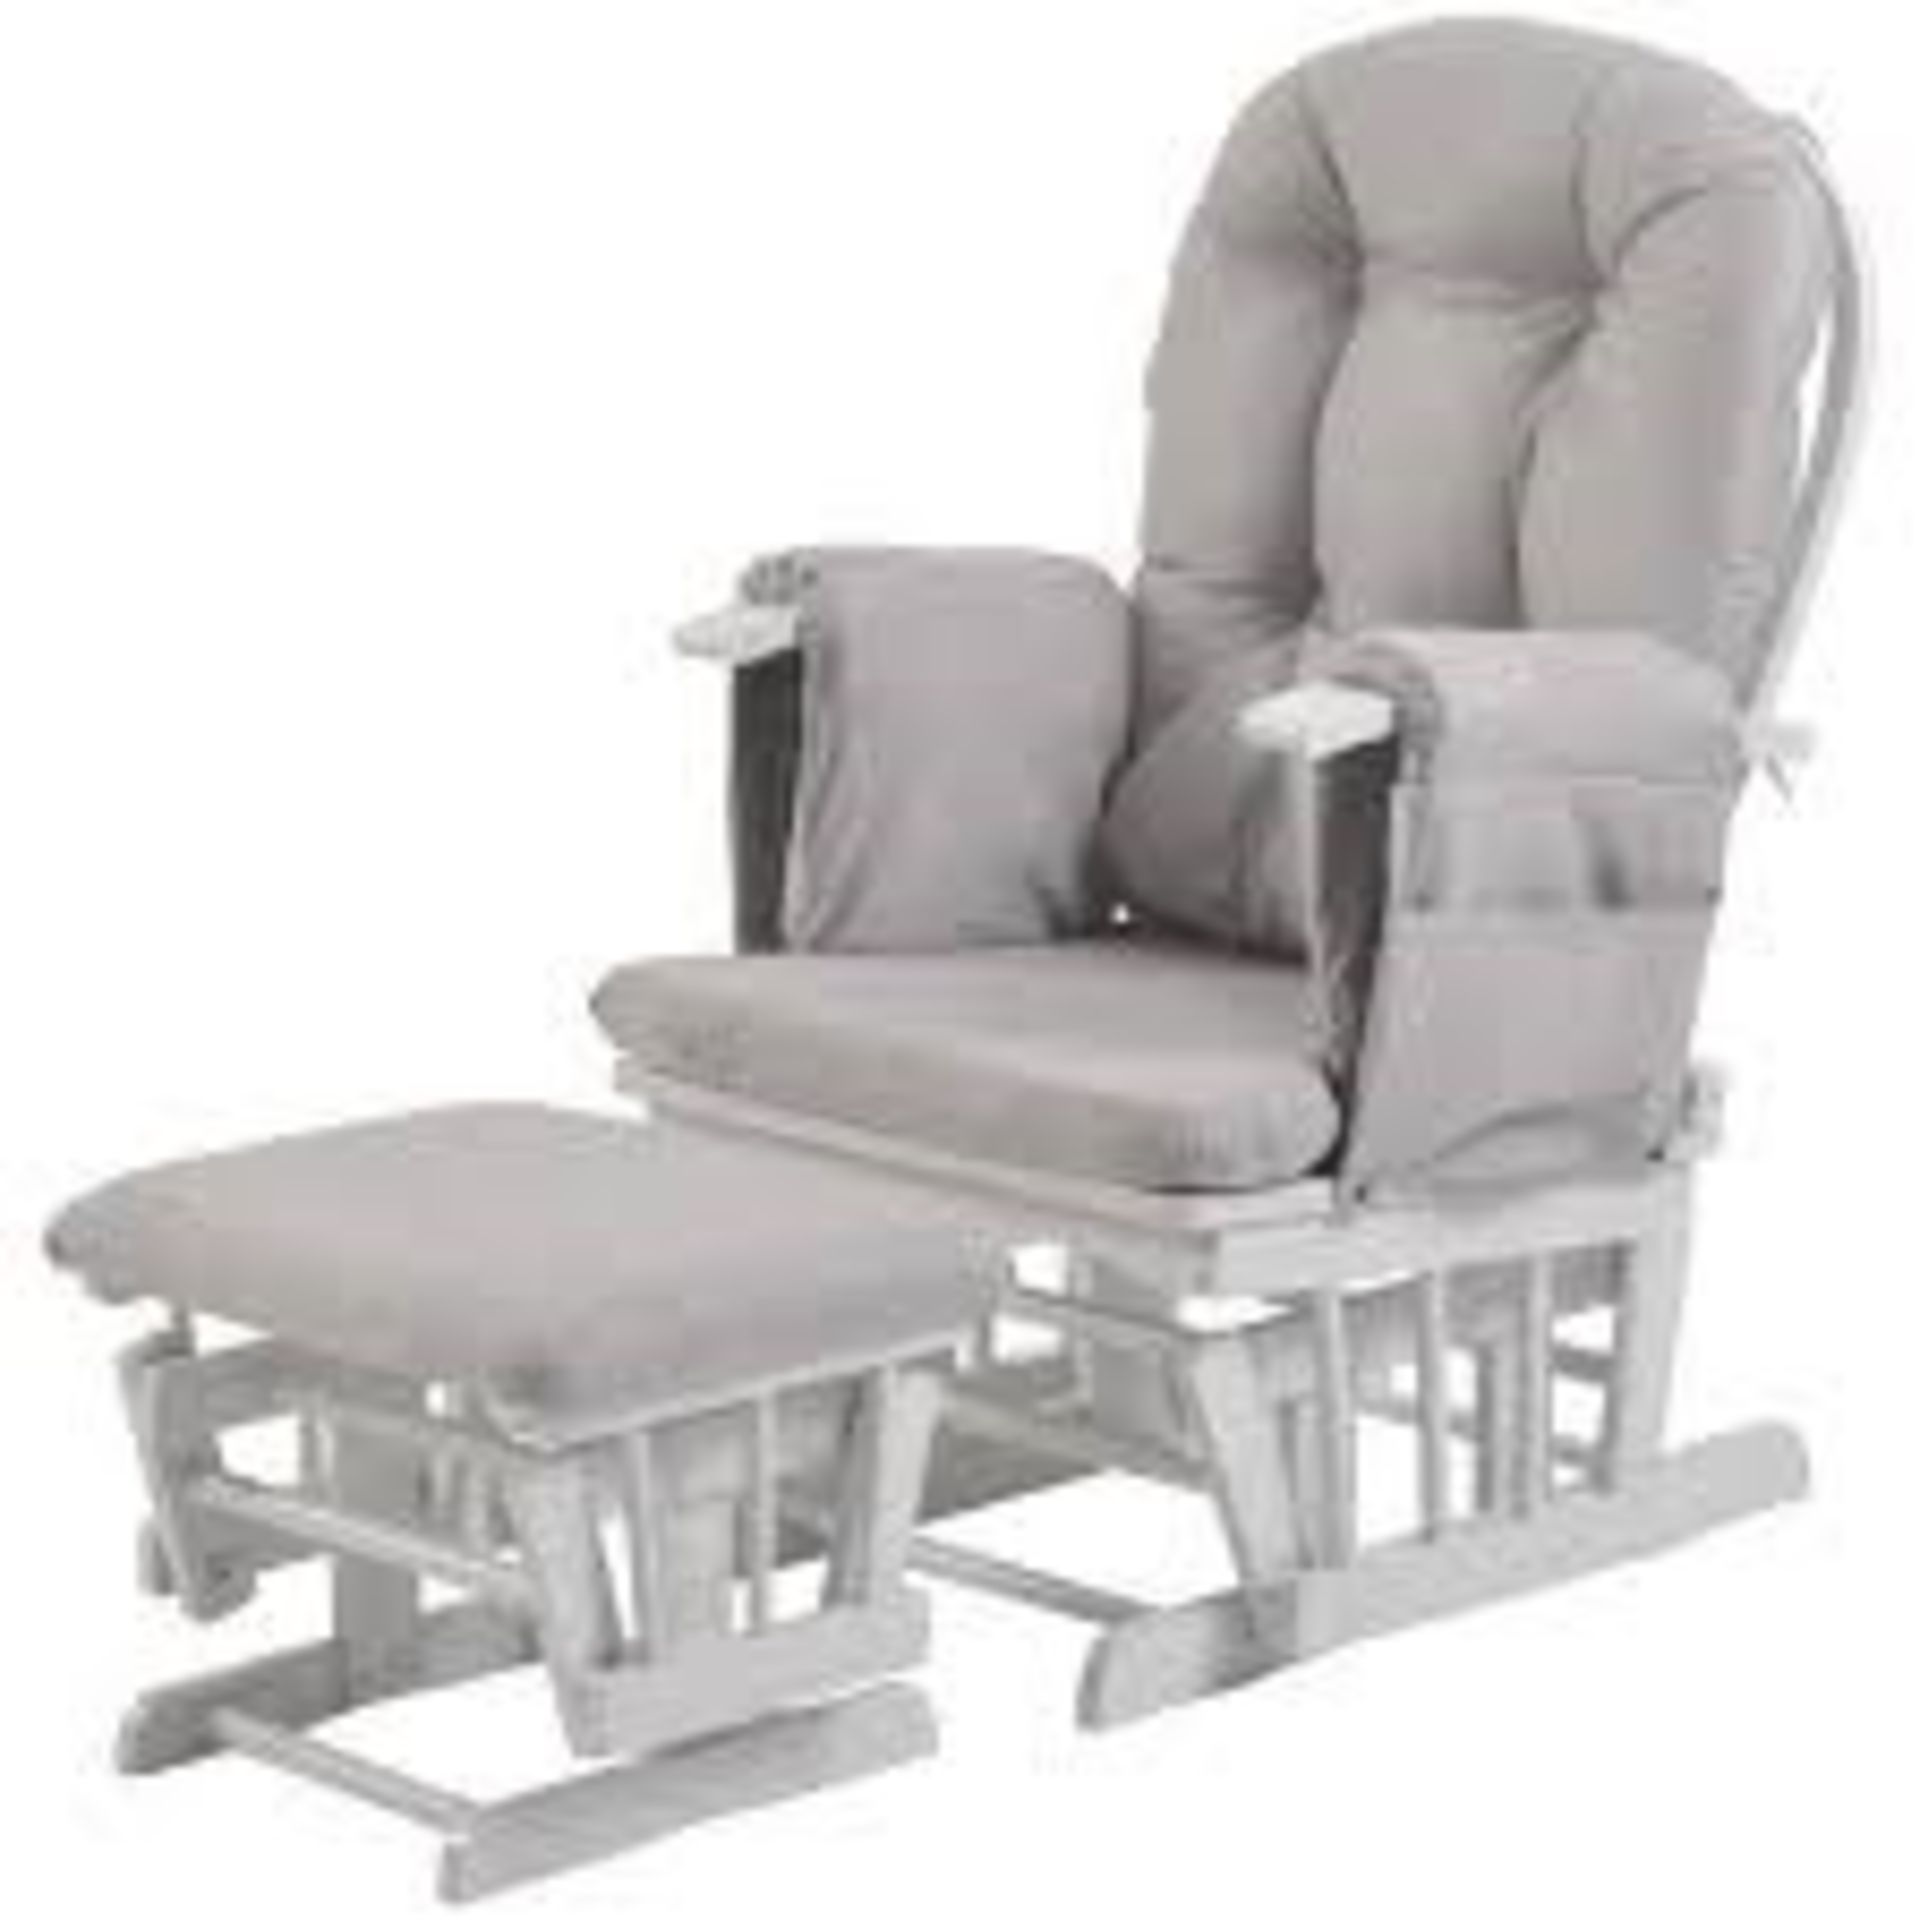 Boxed Kub Haywood Reclining Glider & Footstool Nursing Chair RRP £300 (4995004) (Appraisals